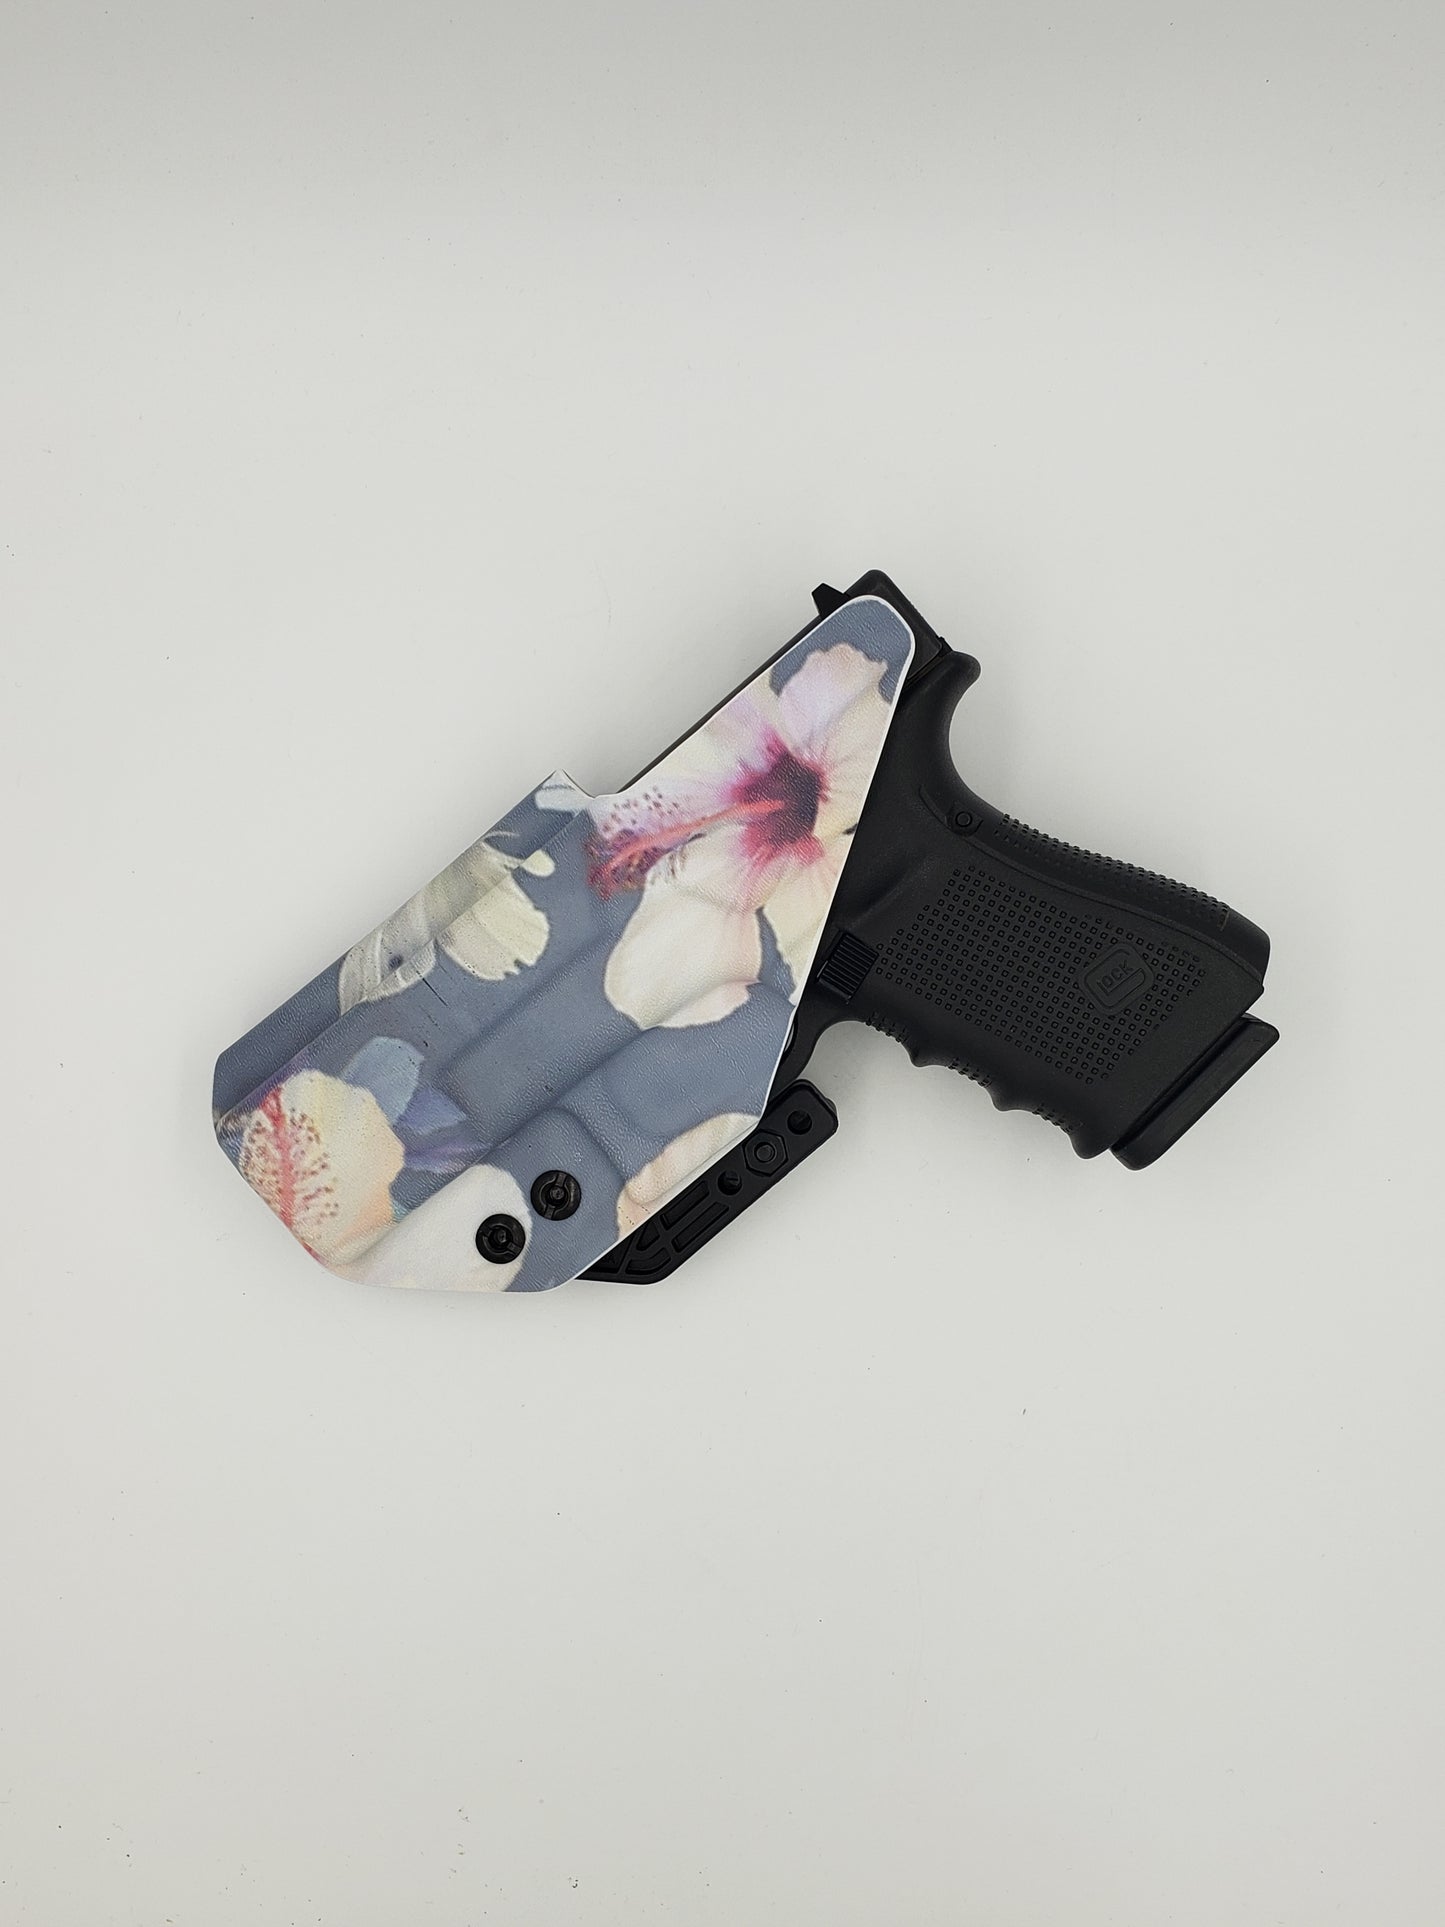 Hibiscus IWB Kydex Holster - Glock 19/23 RH Southern Bullets